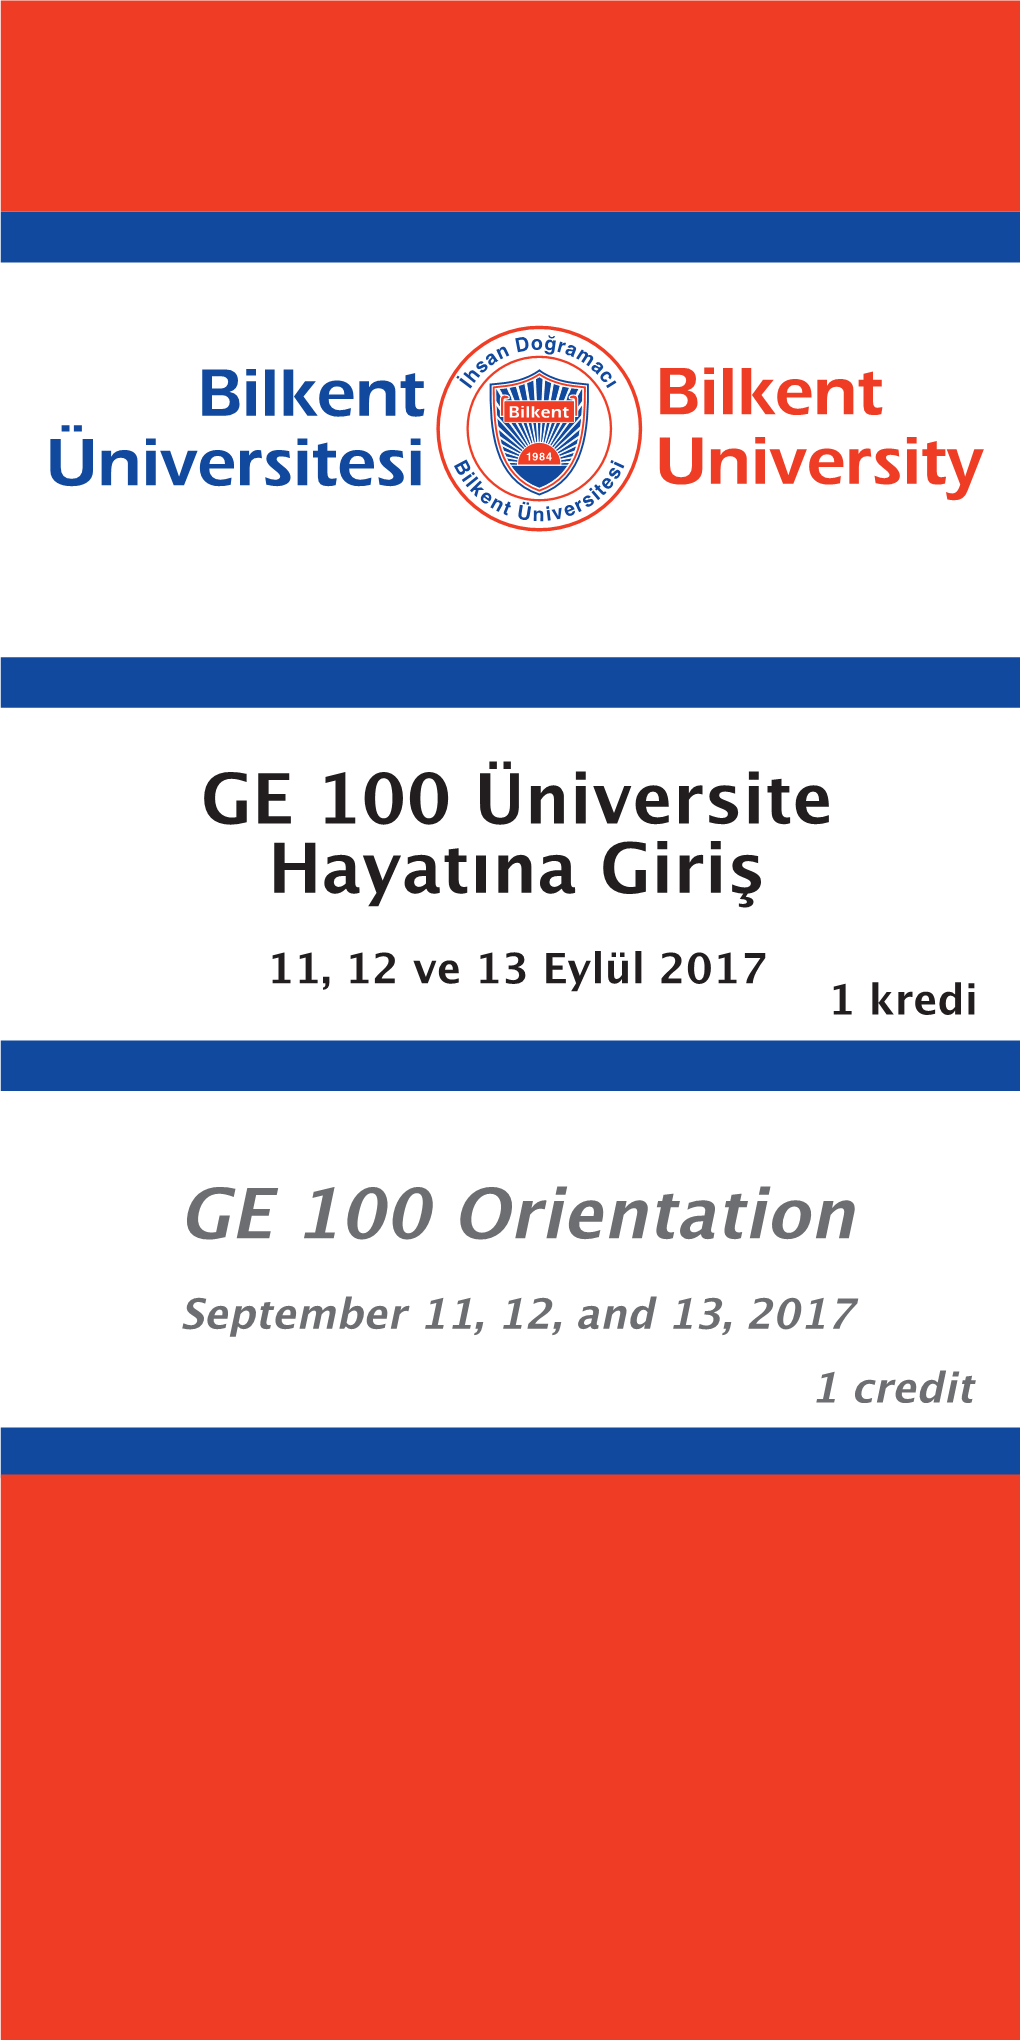 GE 100 Orientation September 11, 12, and 13, 2017 1 Credit